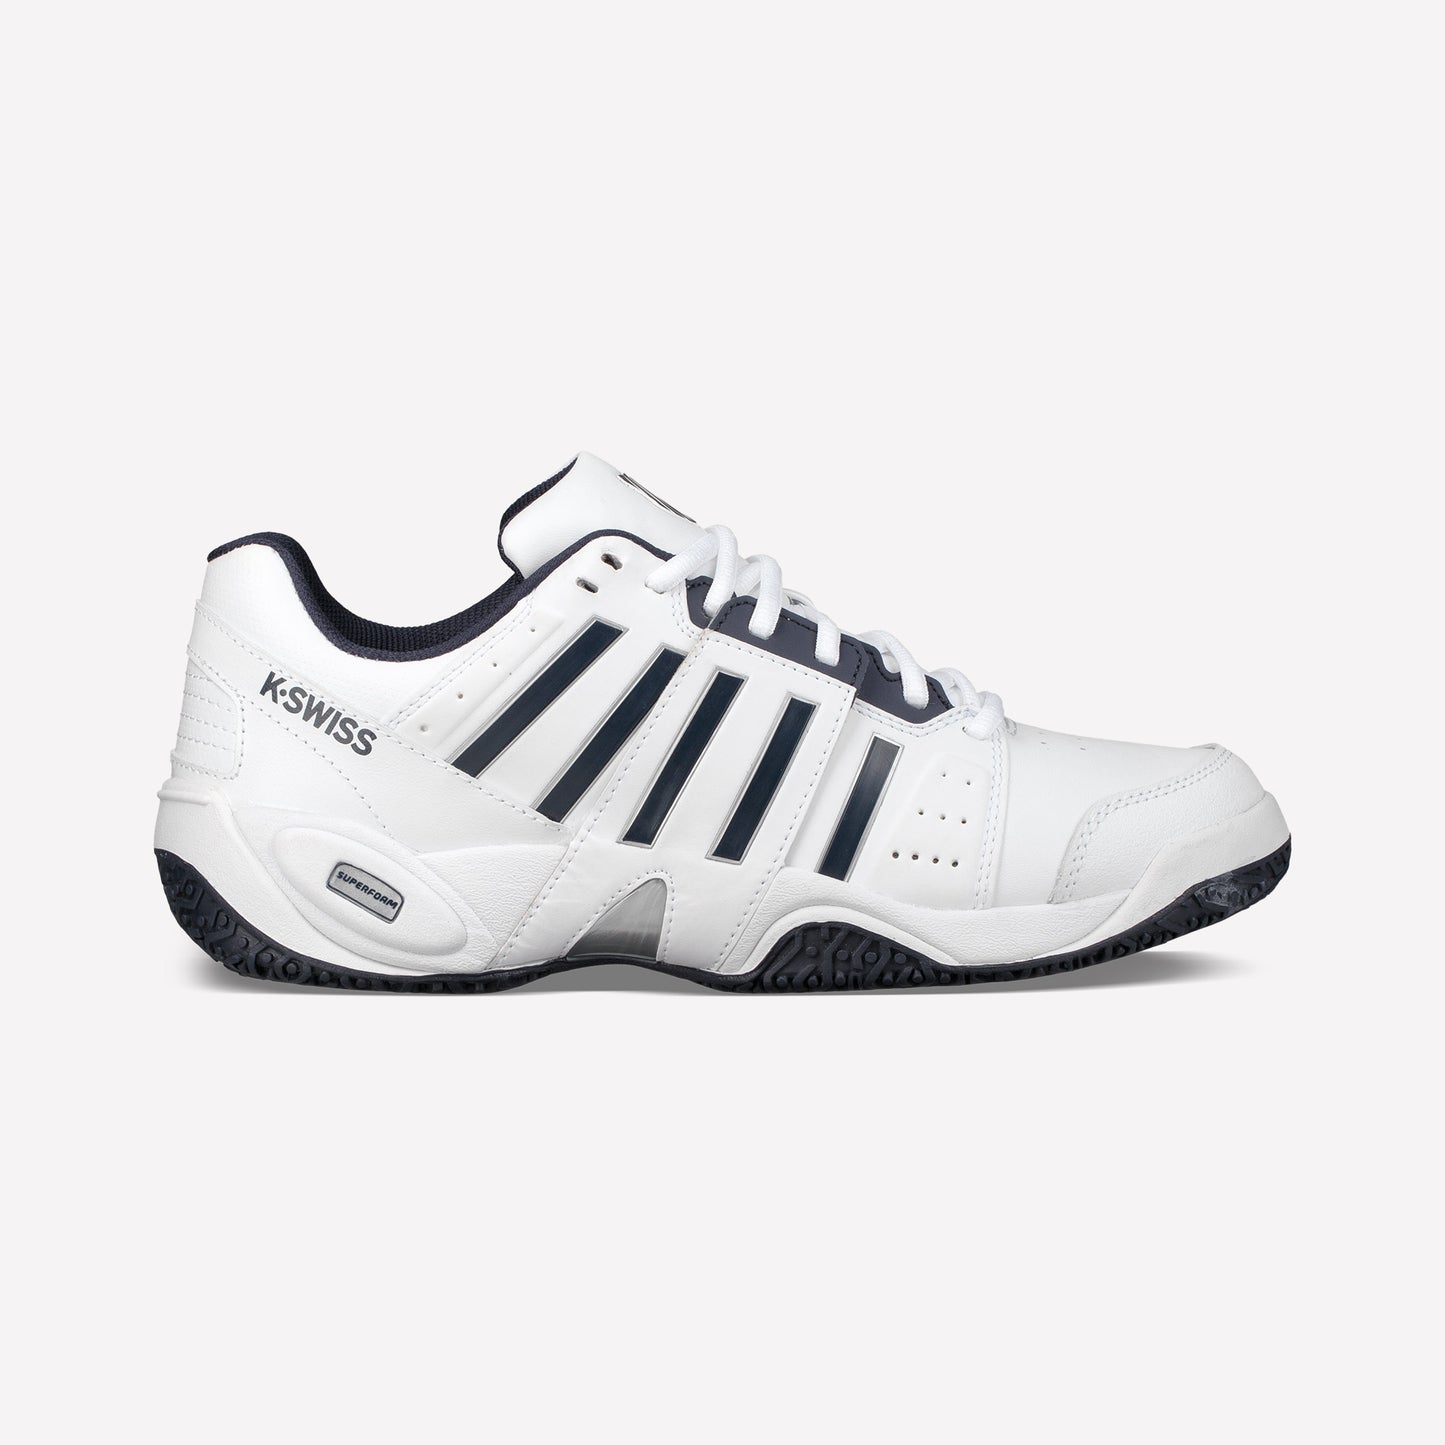 K-Swiss Accomplish III Men's Omni Court Tennis Shoes White (1)